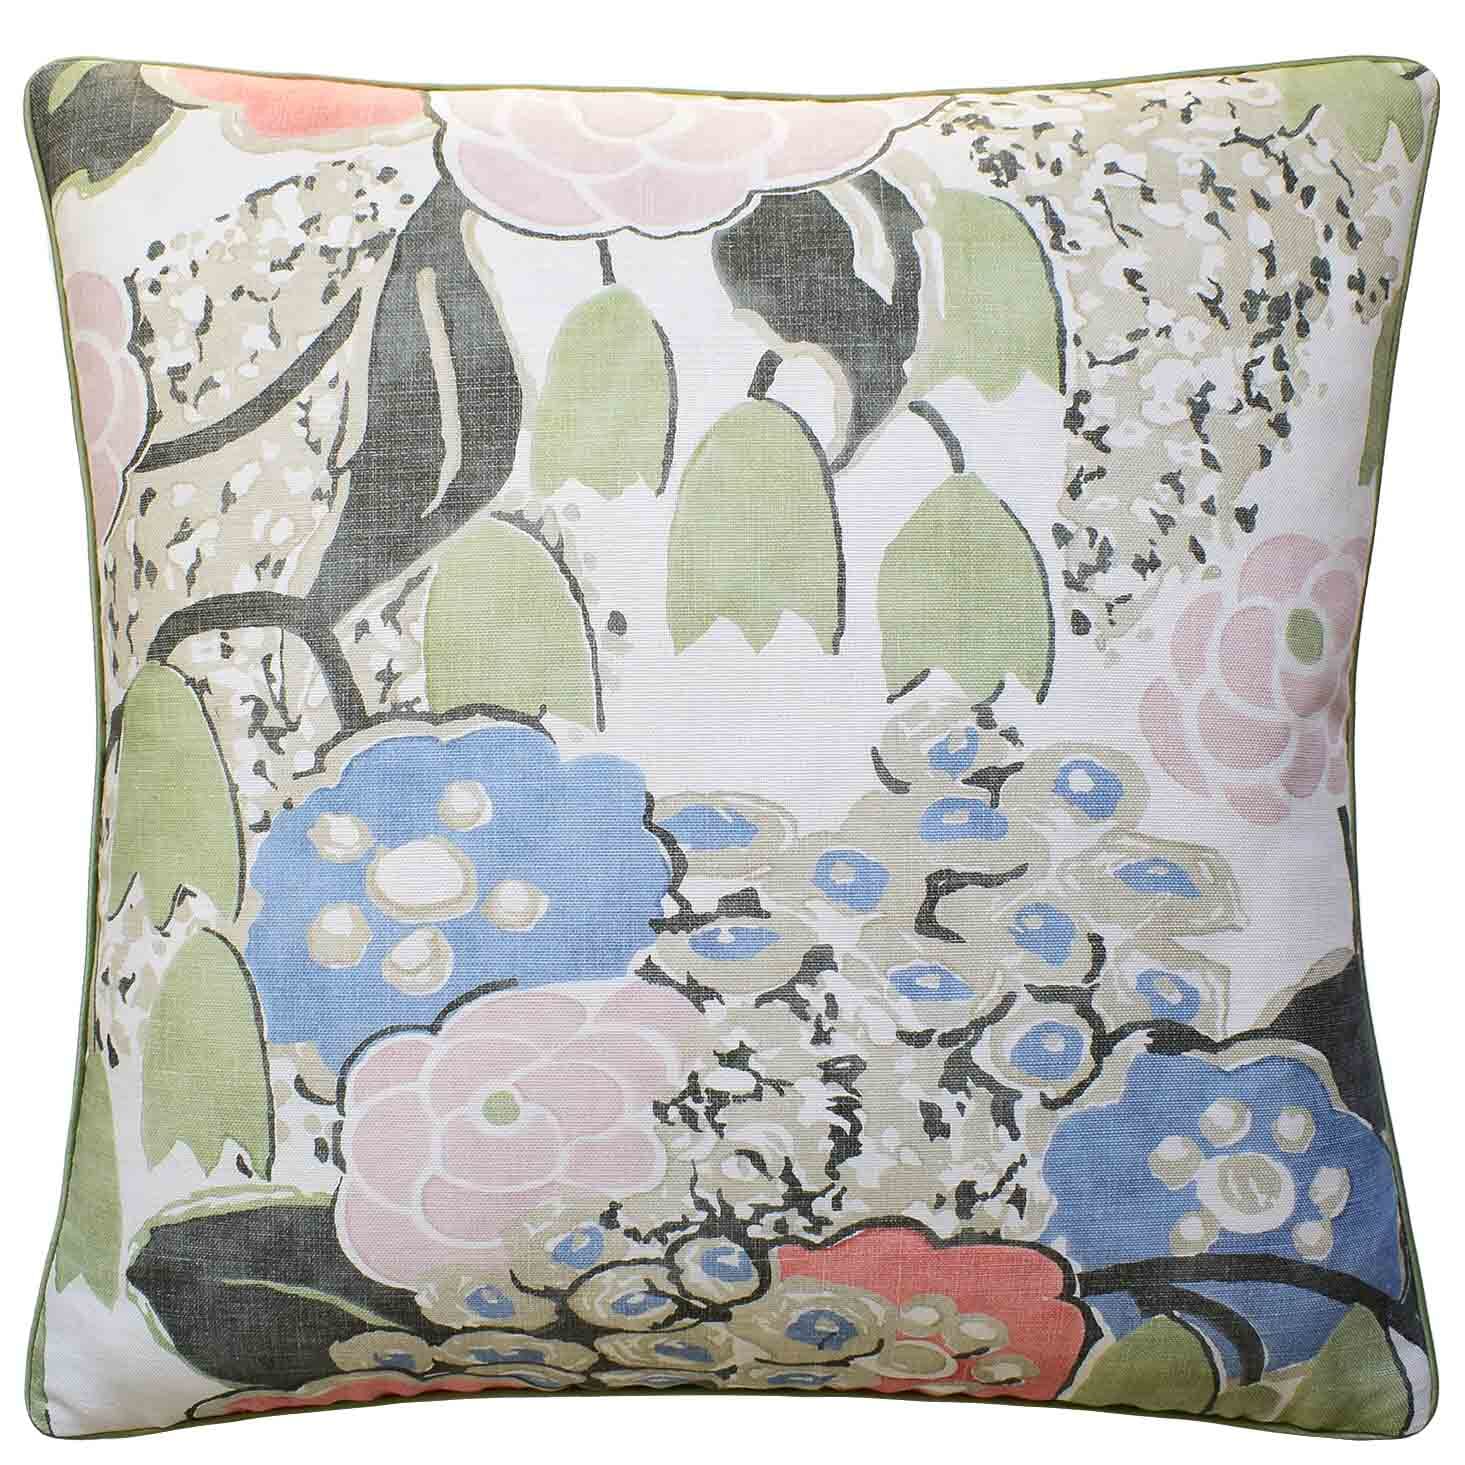 Laura Blush & Green - Throw Pillow by Ryan Studio